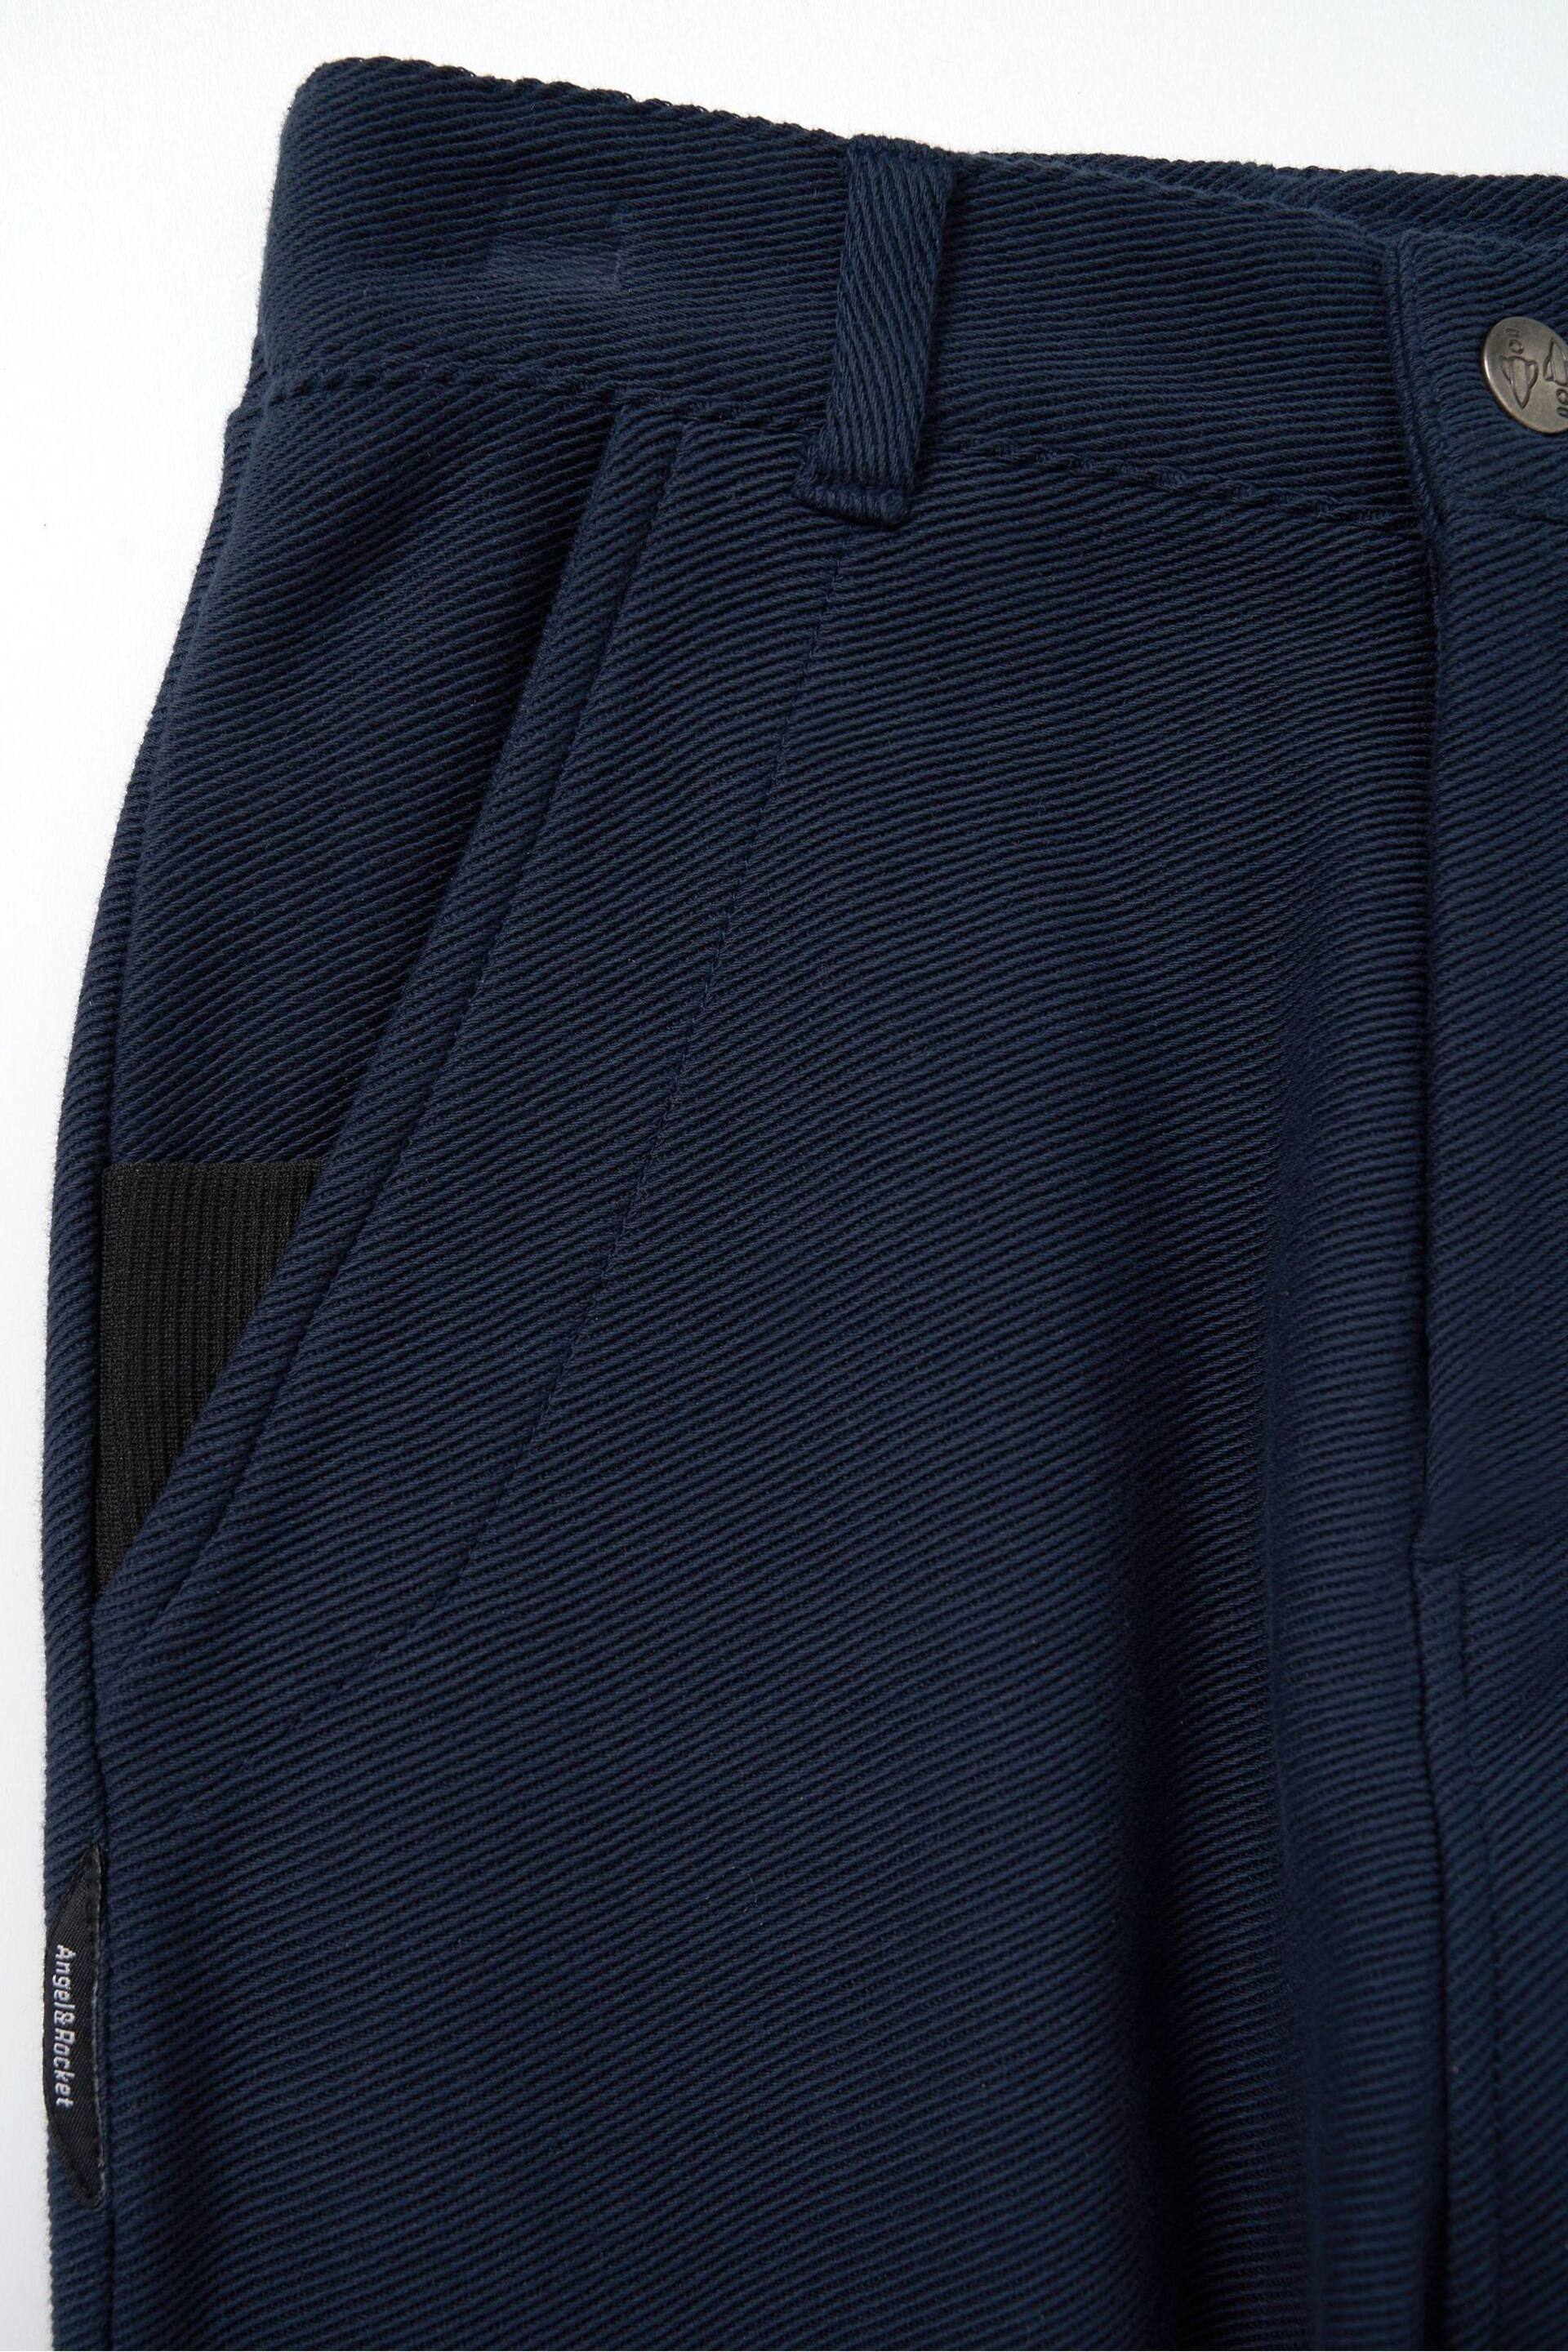 Angel & Rocket Benjamin Smart Jersey Trousers - Image 3 of 3